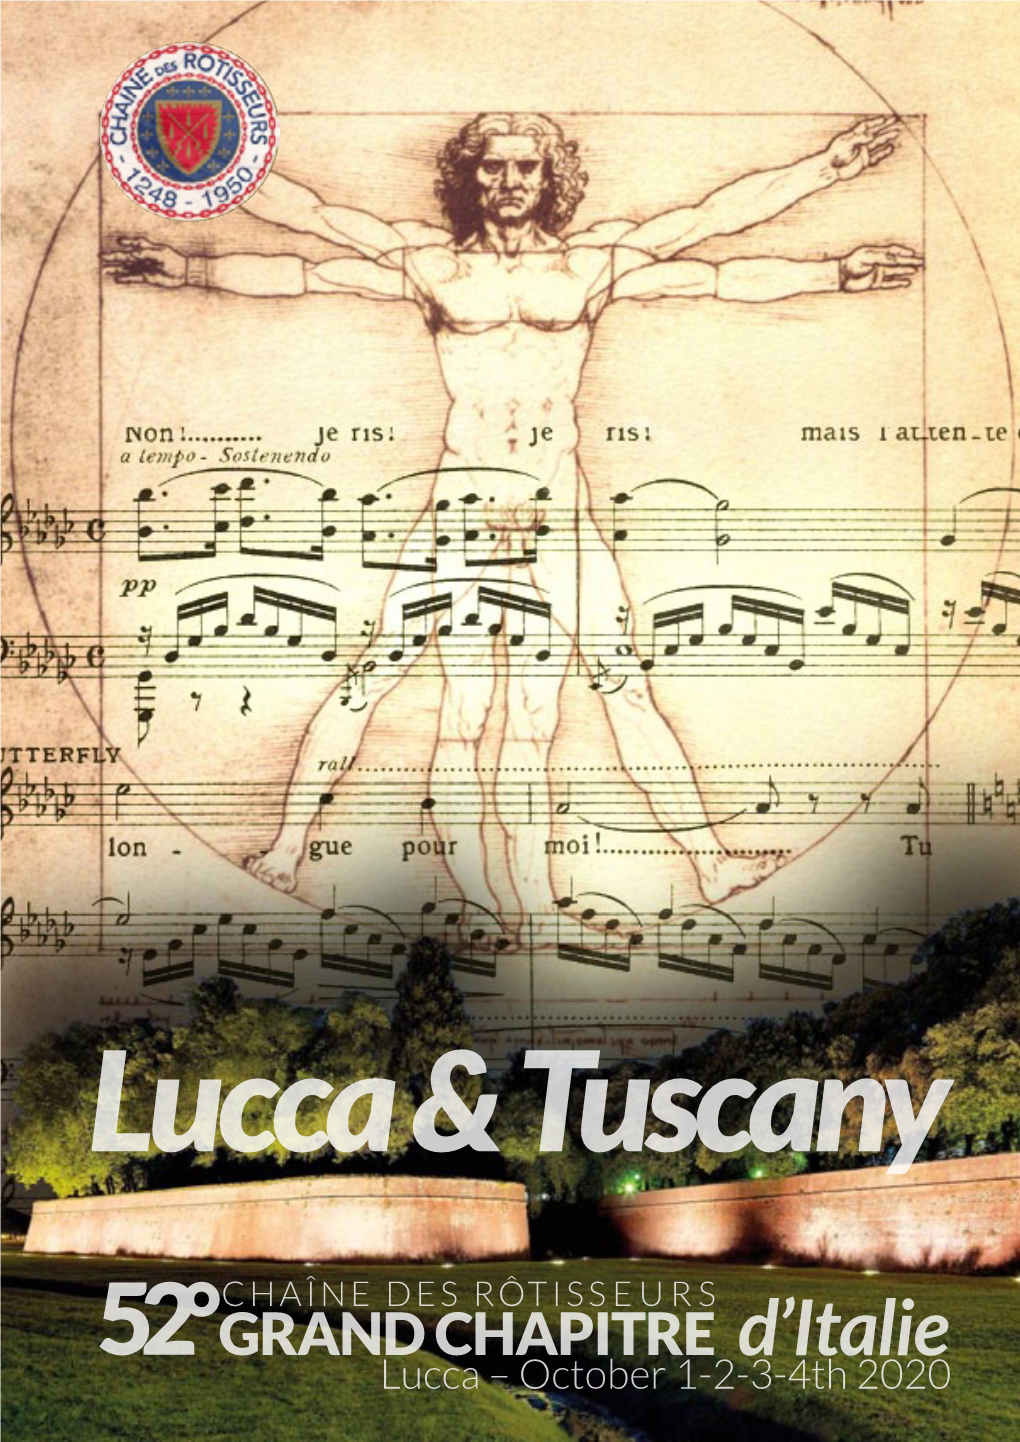 Lucca & Tuscany